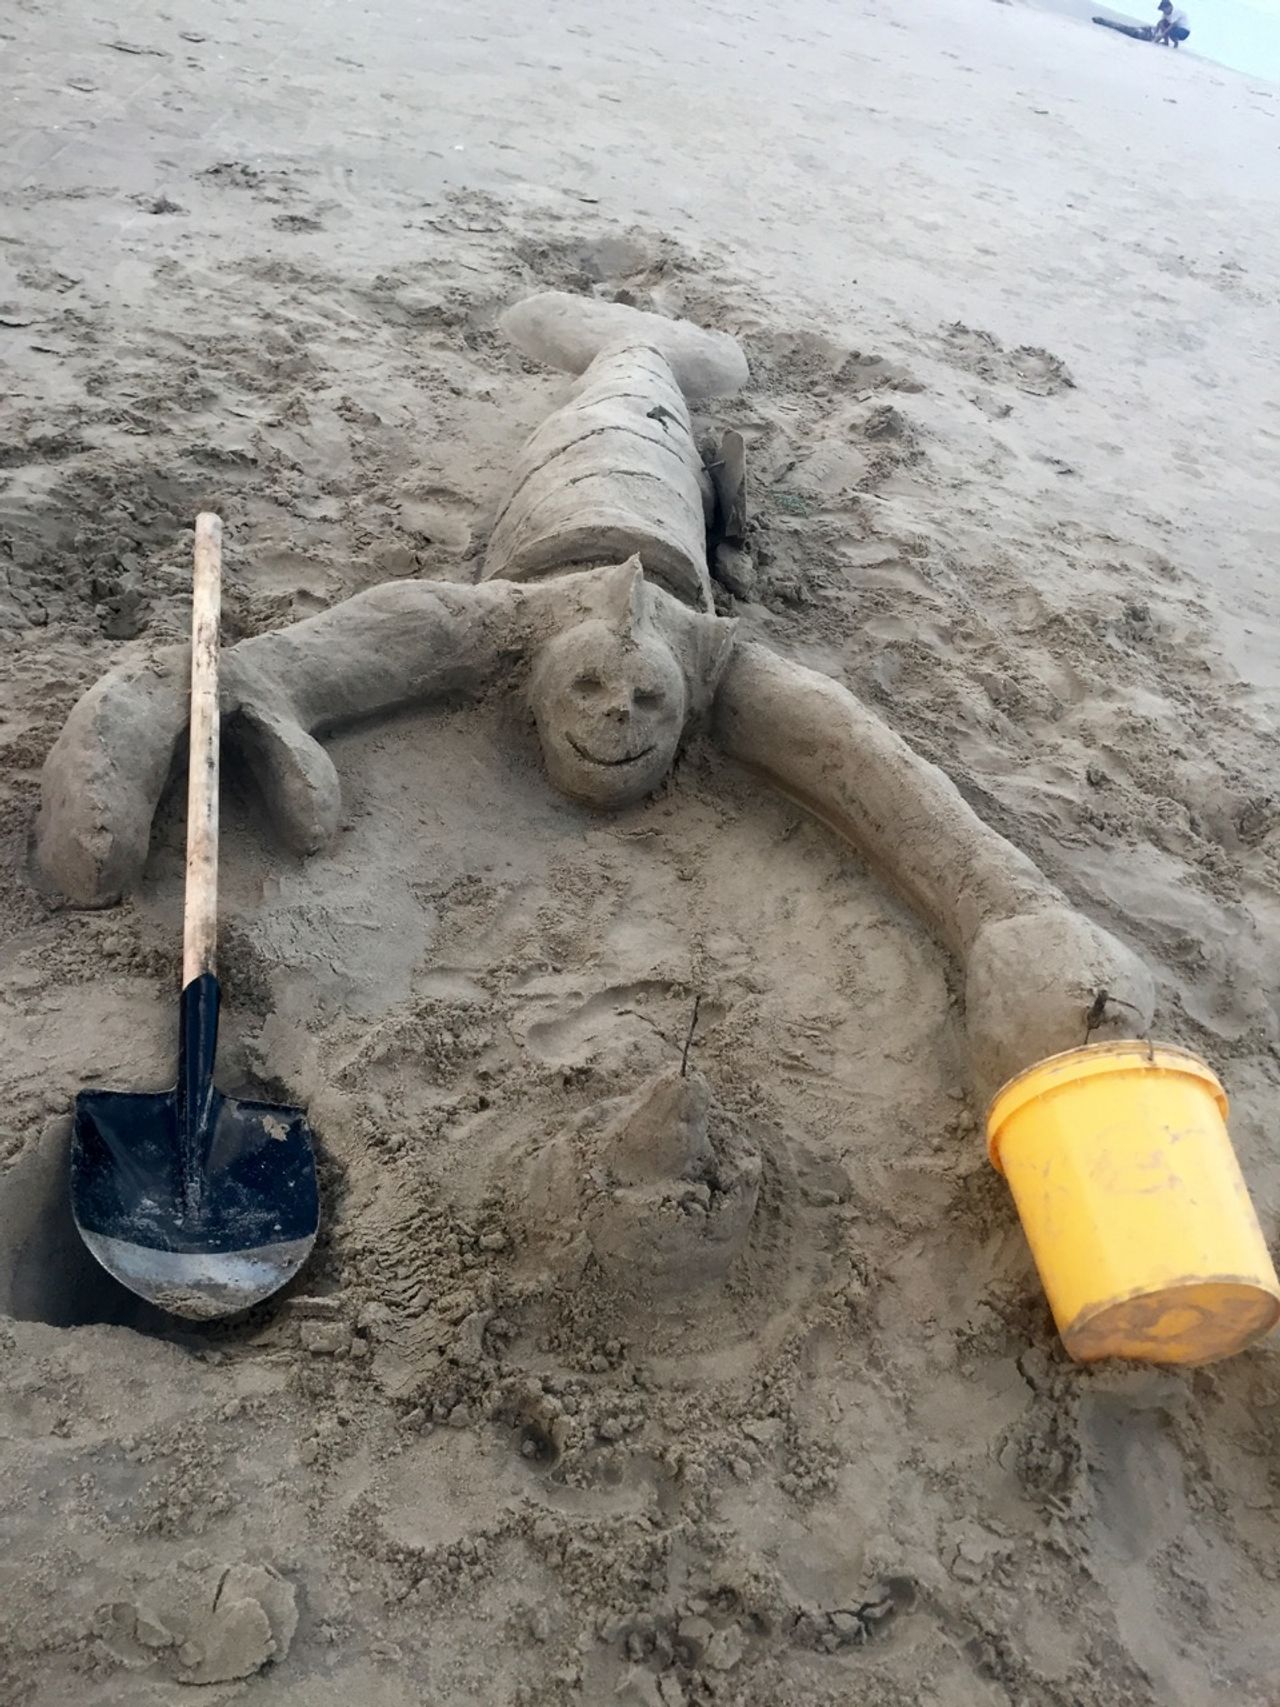 Crab-clown-shark building a sandcastle